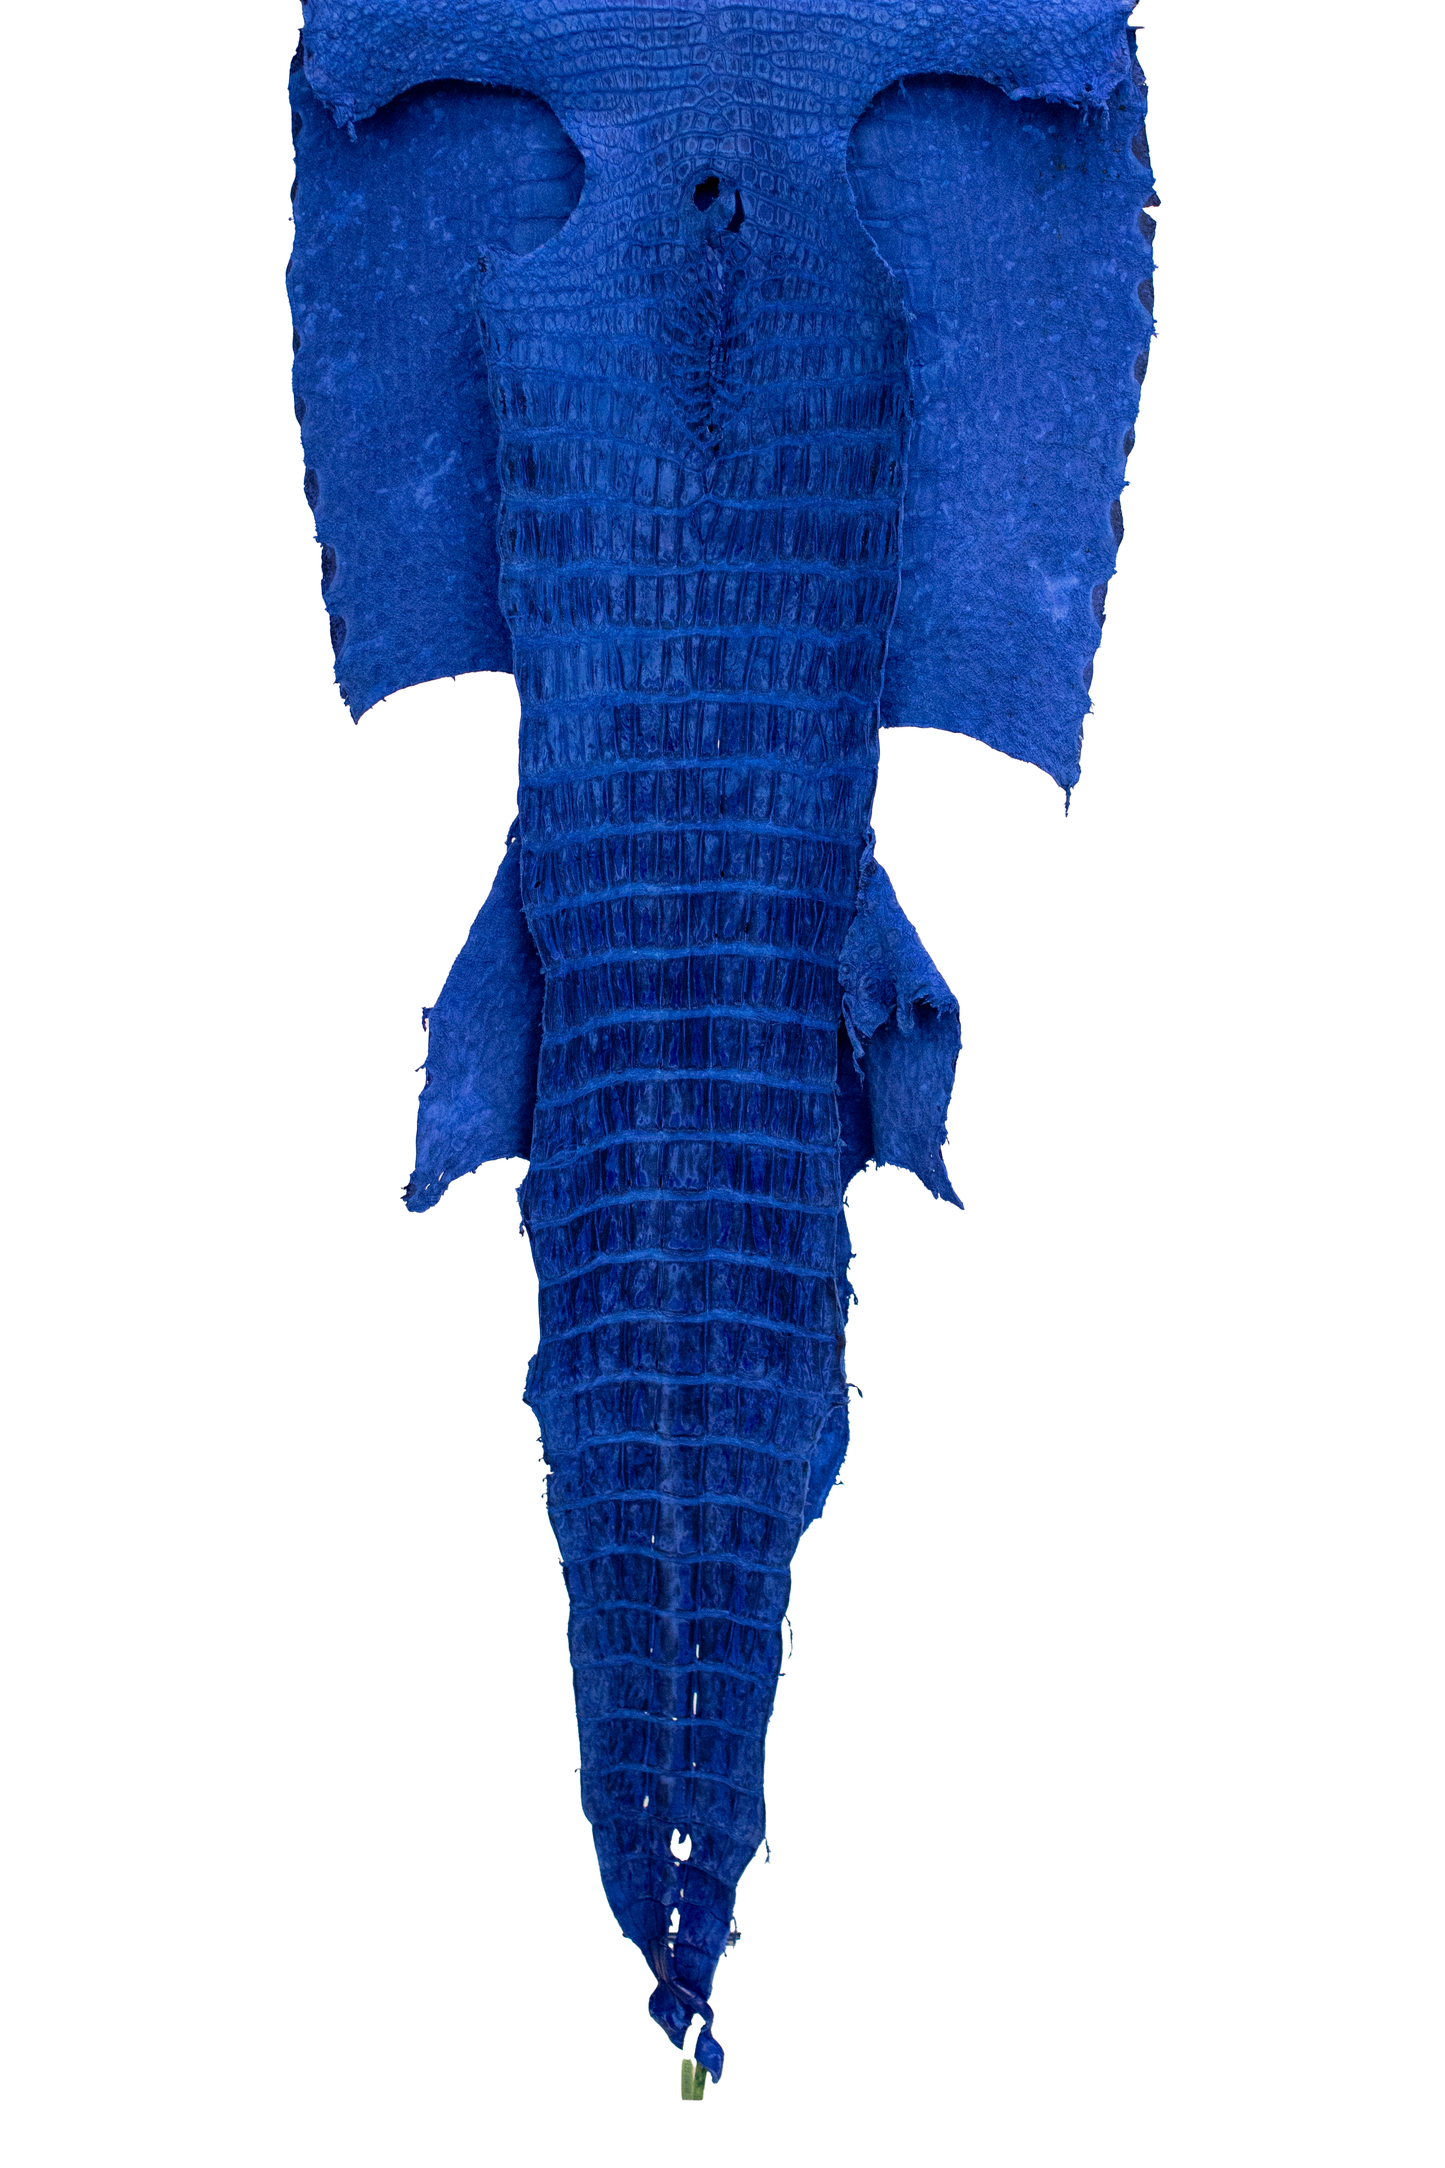 63 cm Grade 2/3 Navy Blue Nubuck Wild American Alligator Leather - Tag: FL22-0034148